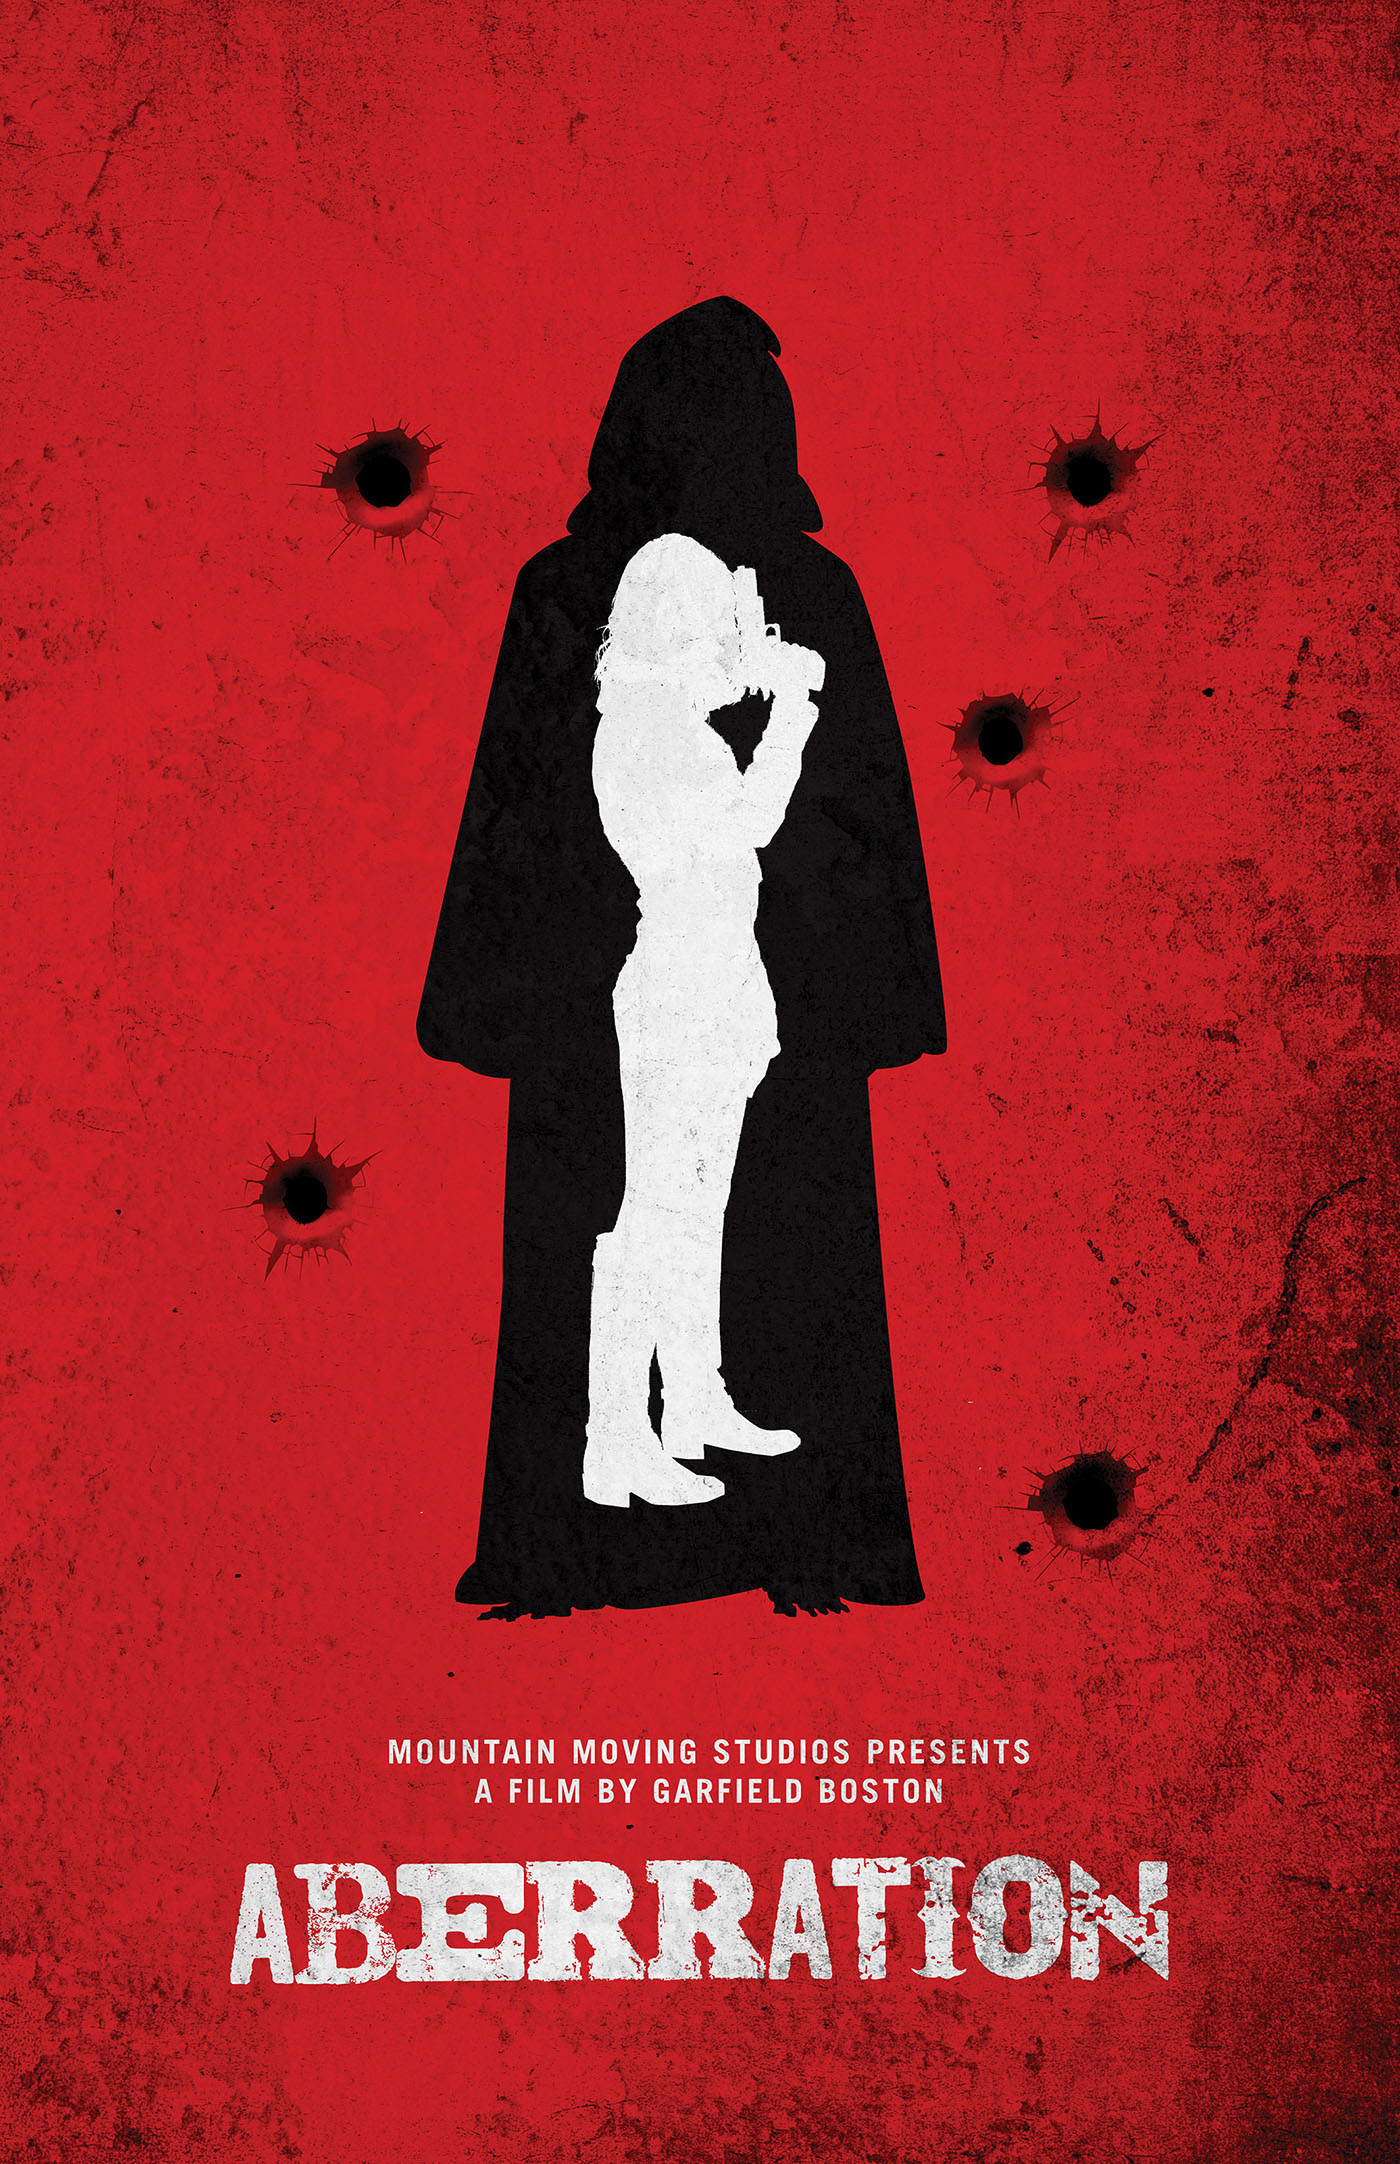 movie women revenge poster concepts